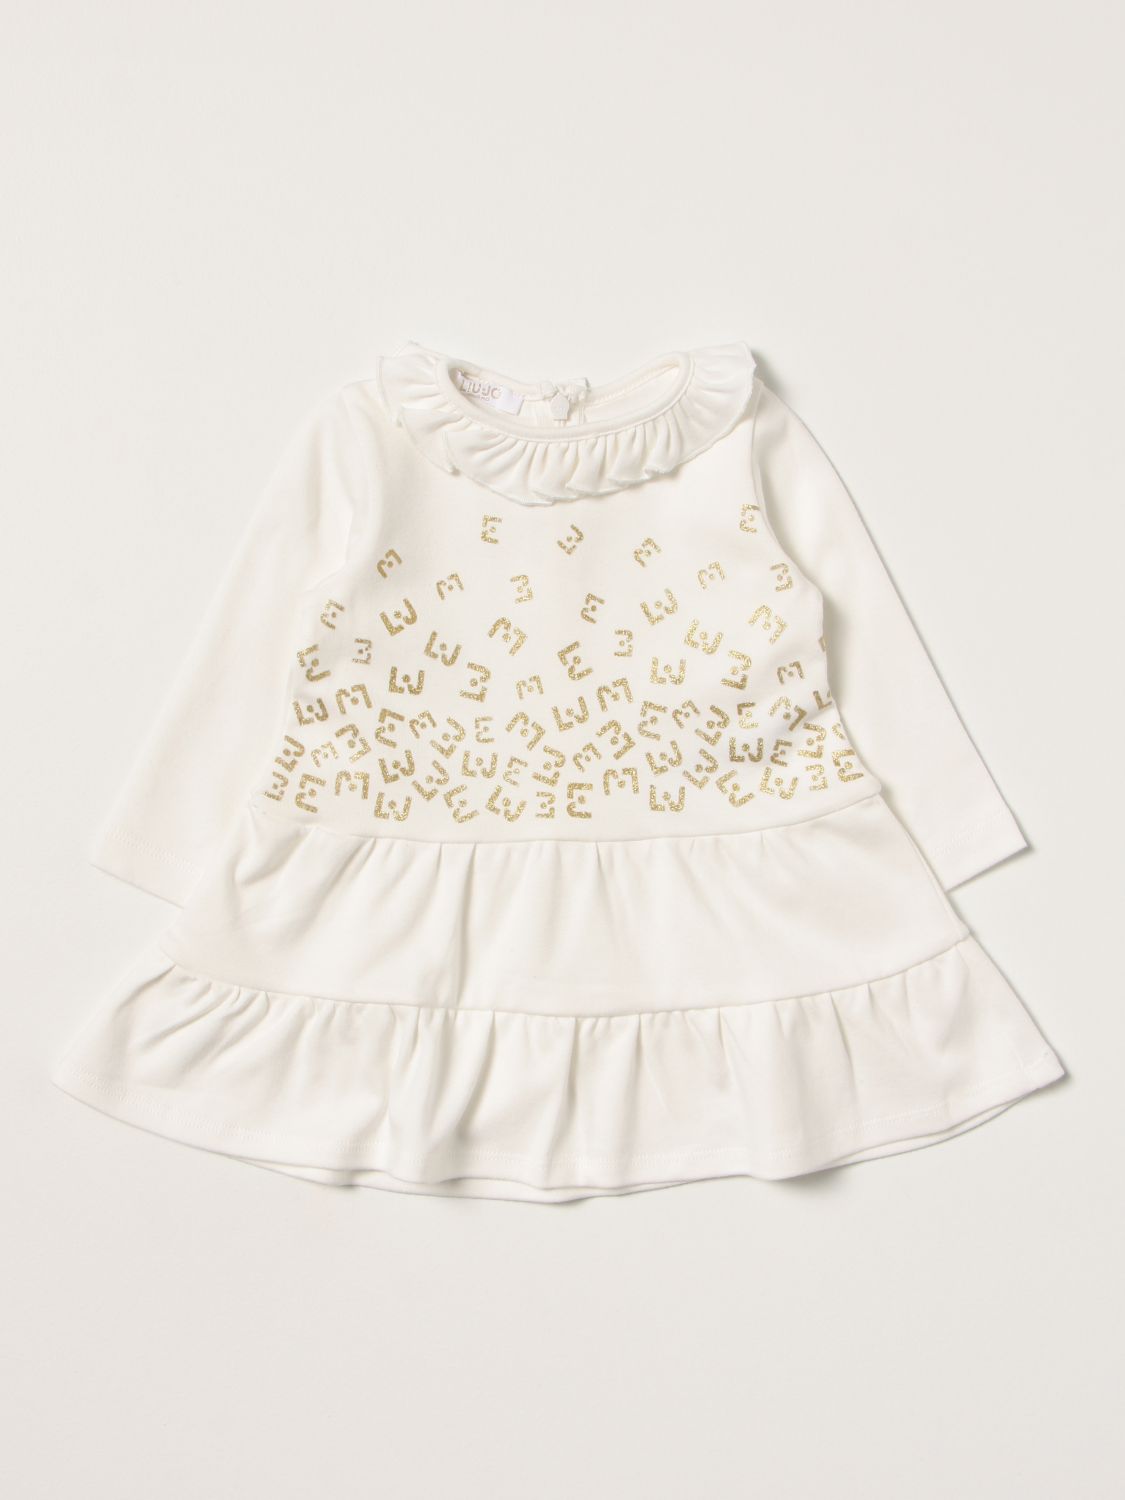 Incubus ik zal sterk zijn militie Liu •jo Babies' Cotton Dress With Logo In White | ModeSens